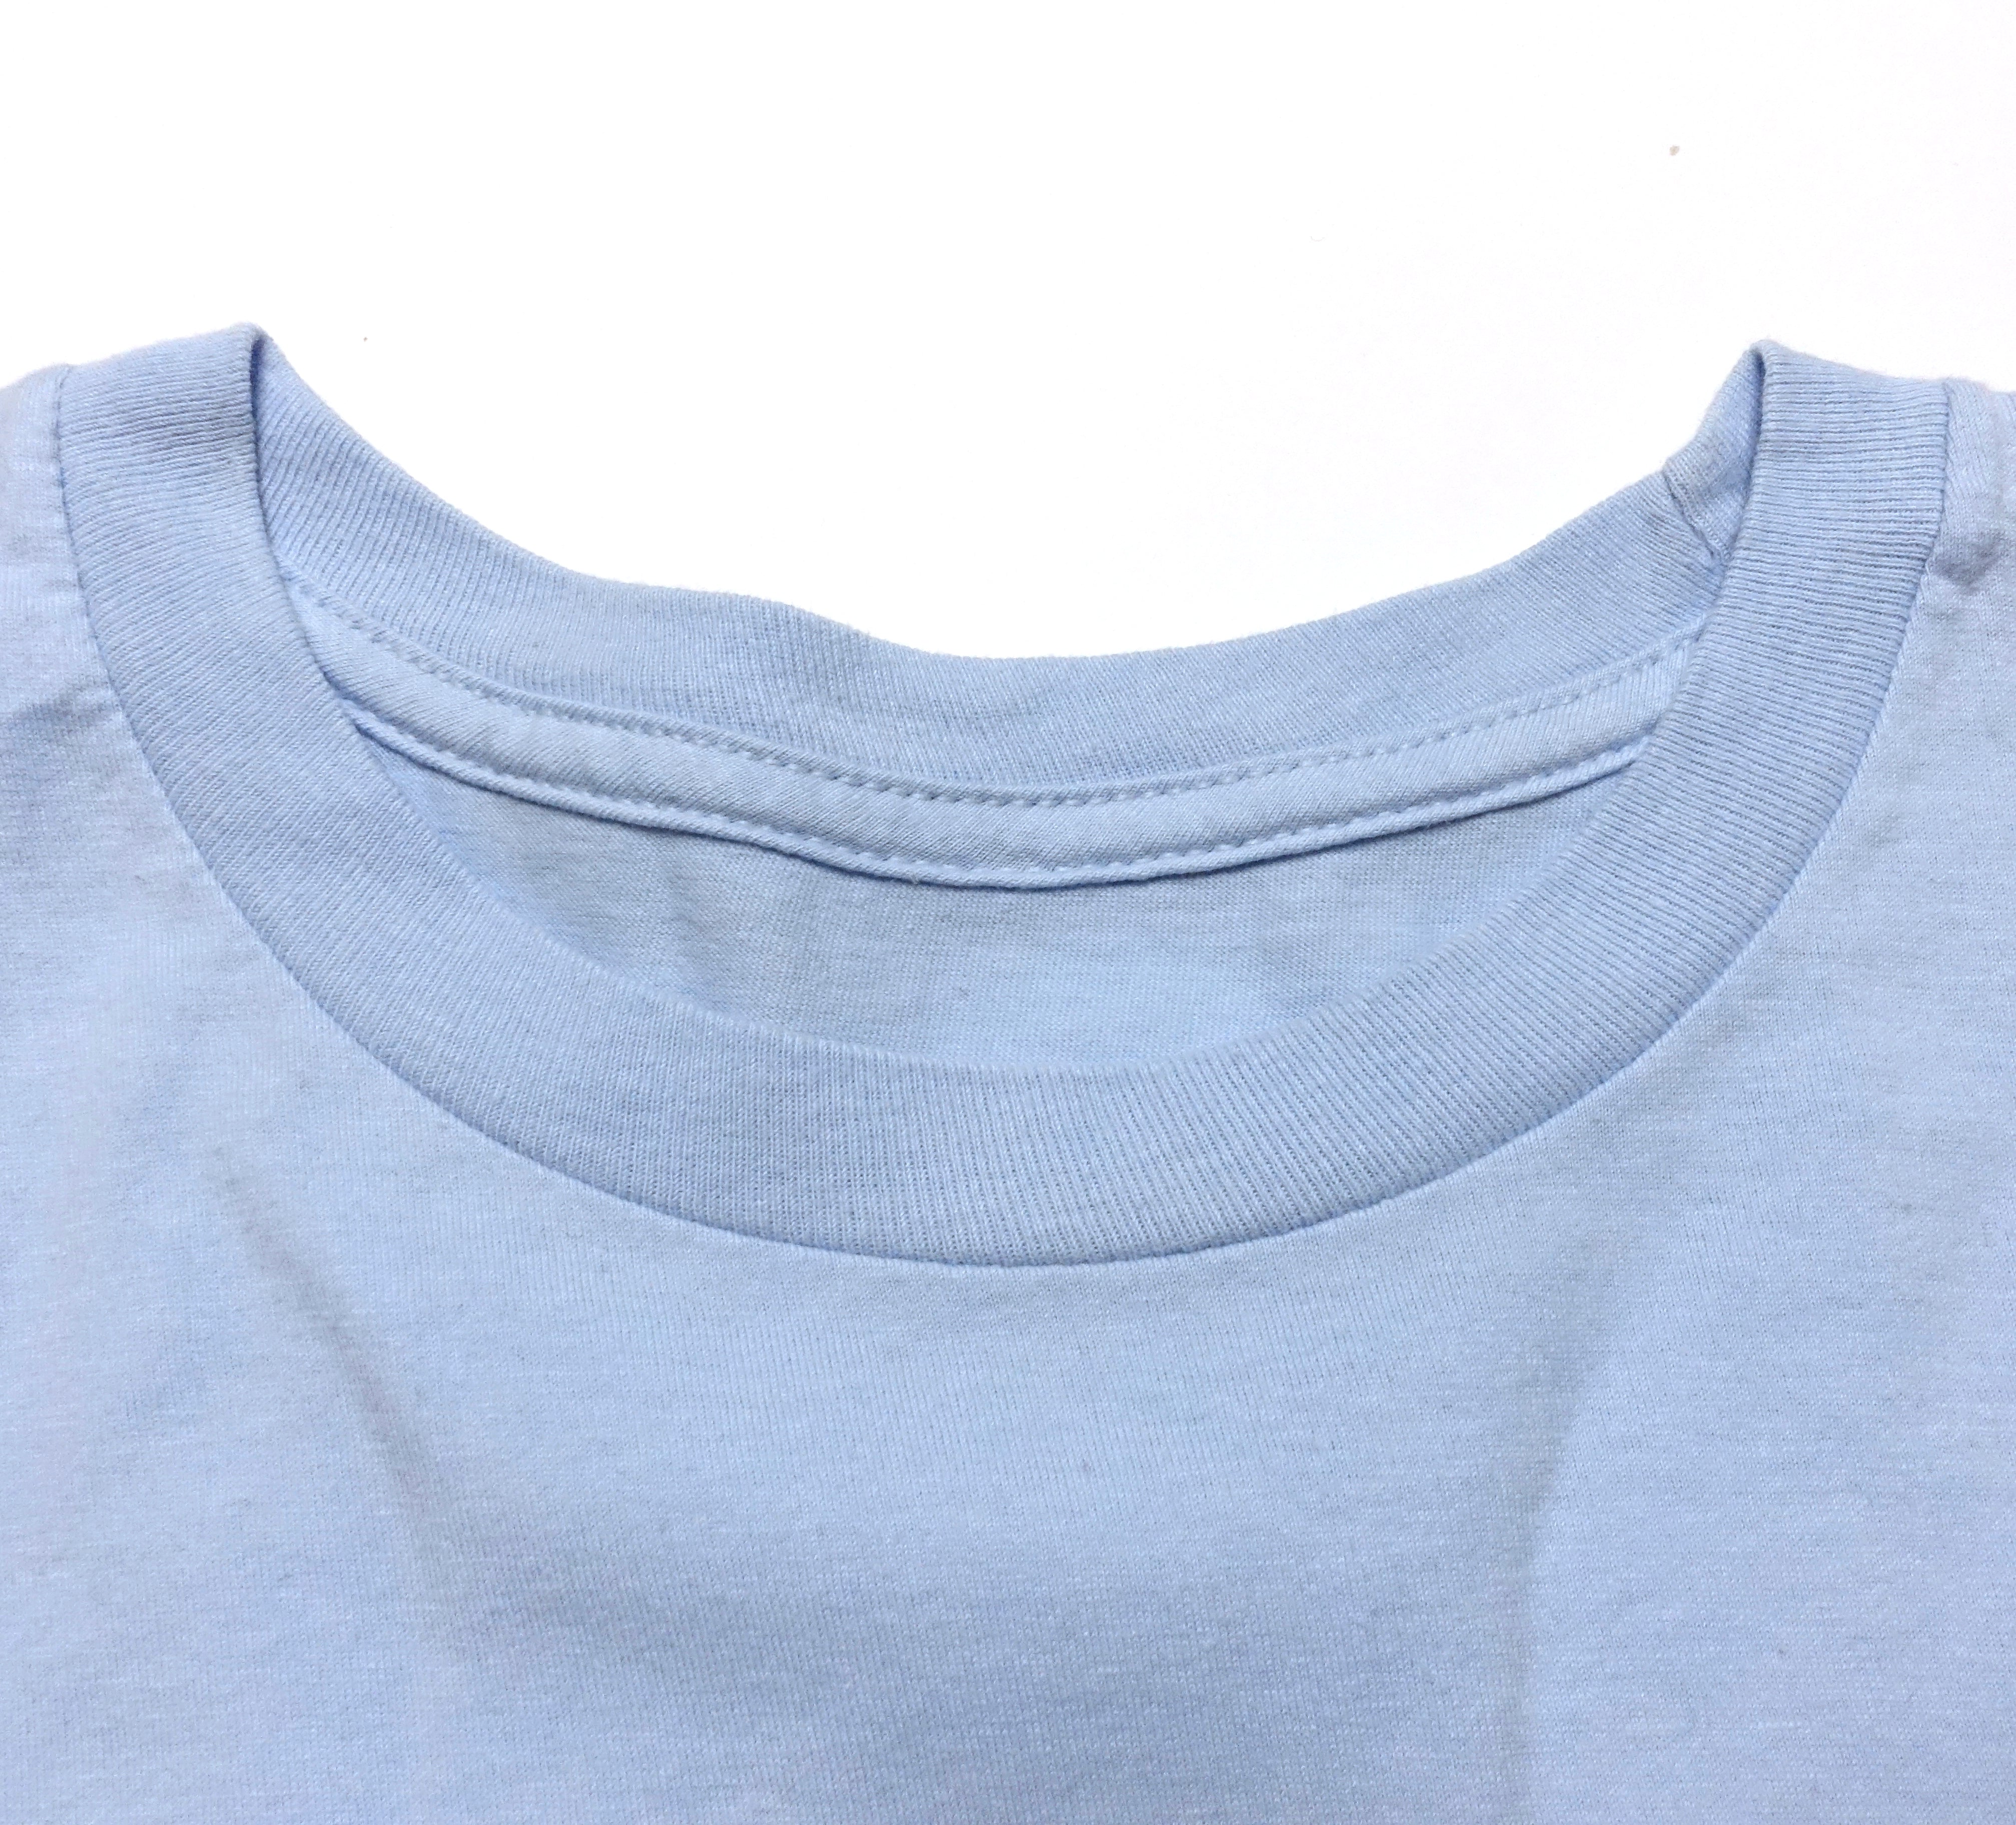 Stereolab – Cliff 00's Tour Shirt Size Large (Blue/Blue)